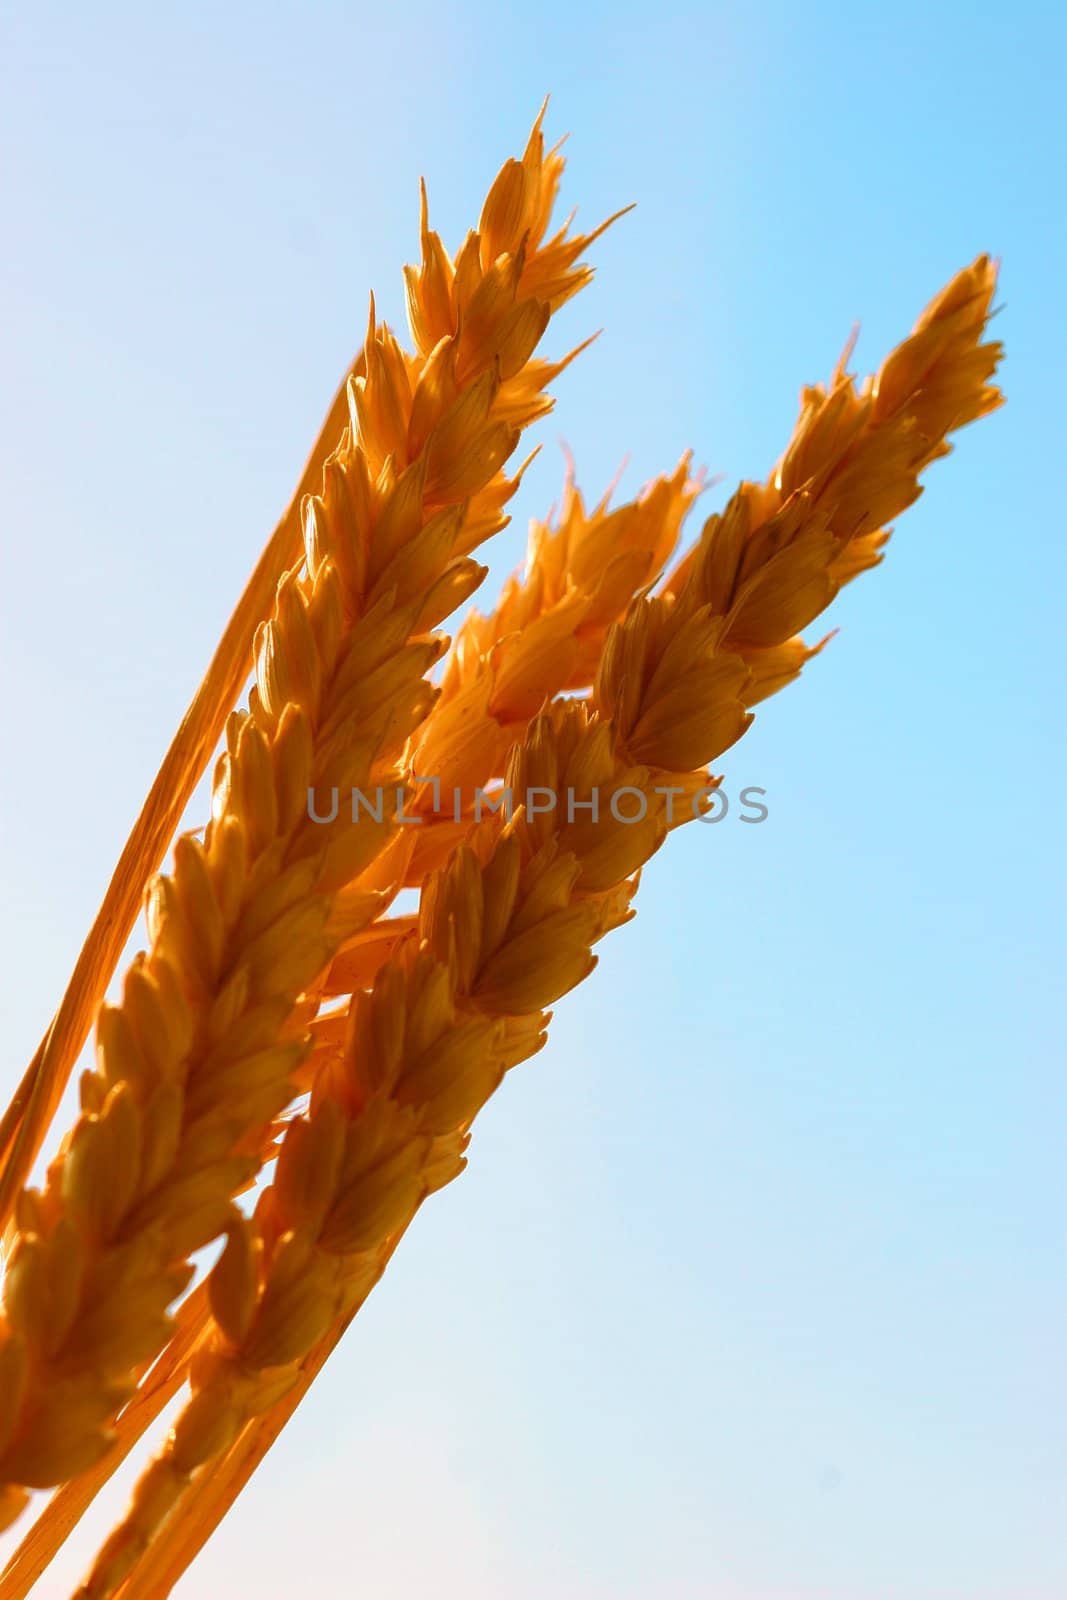 Golden wheat against a blue sky